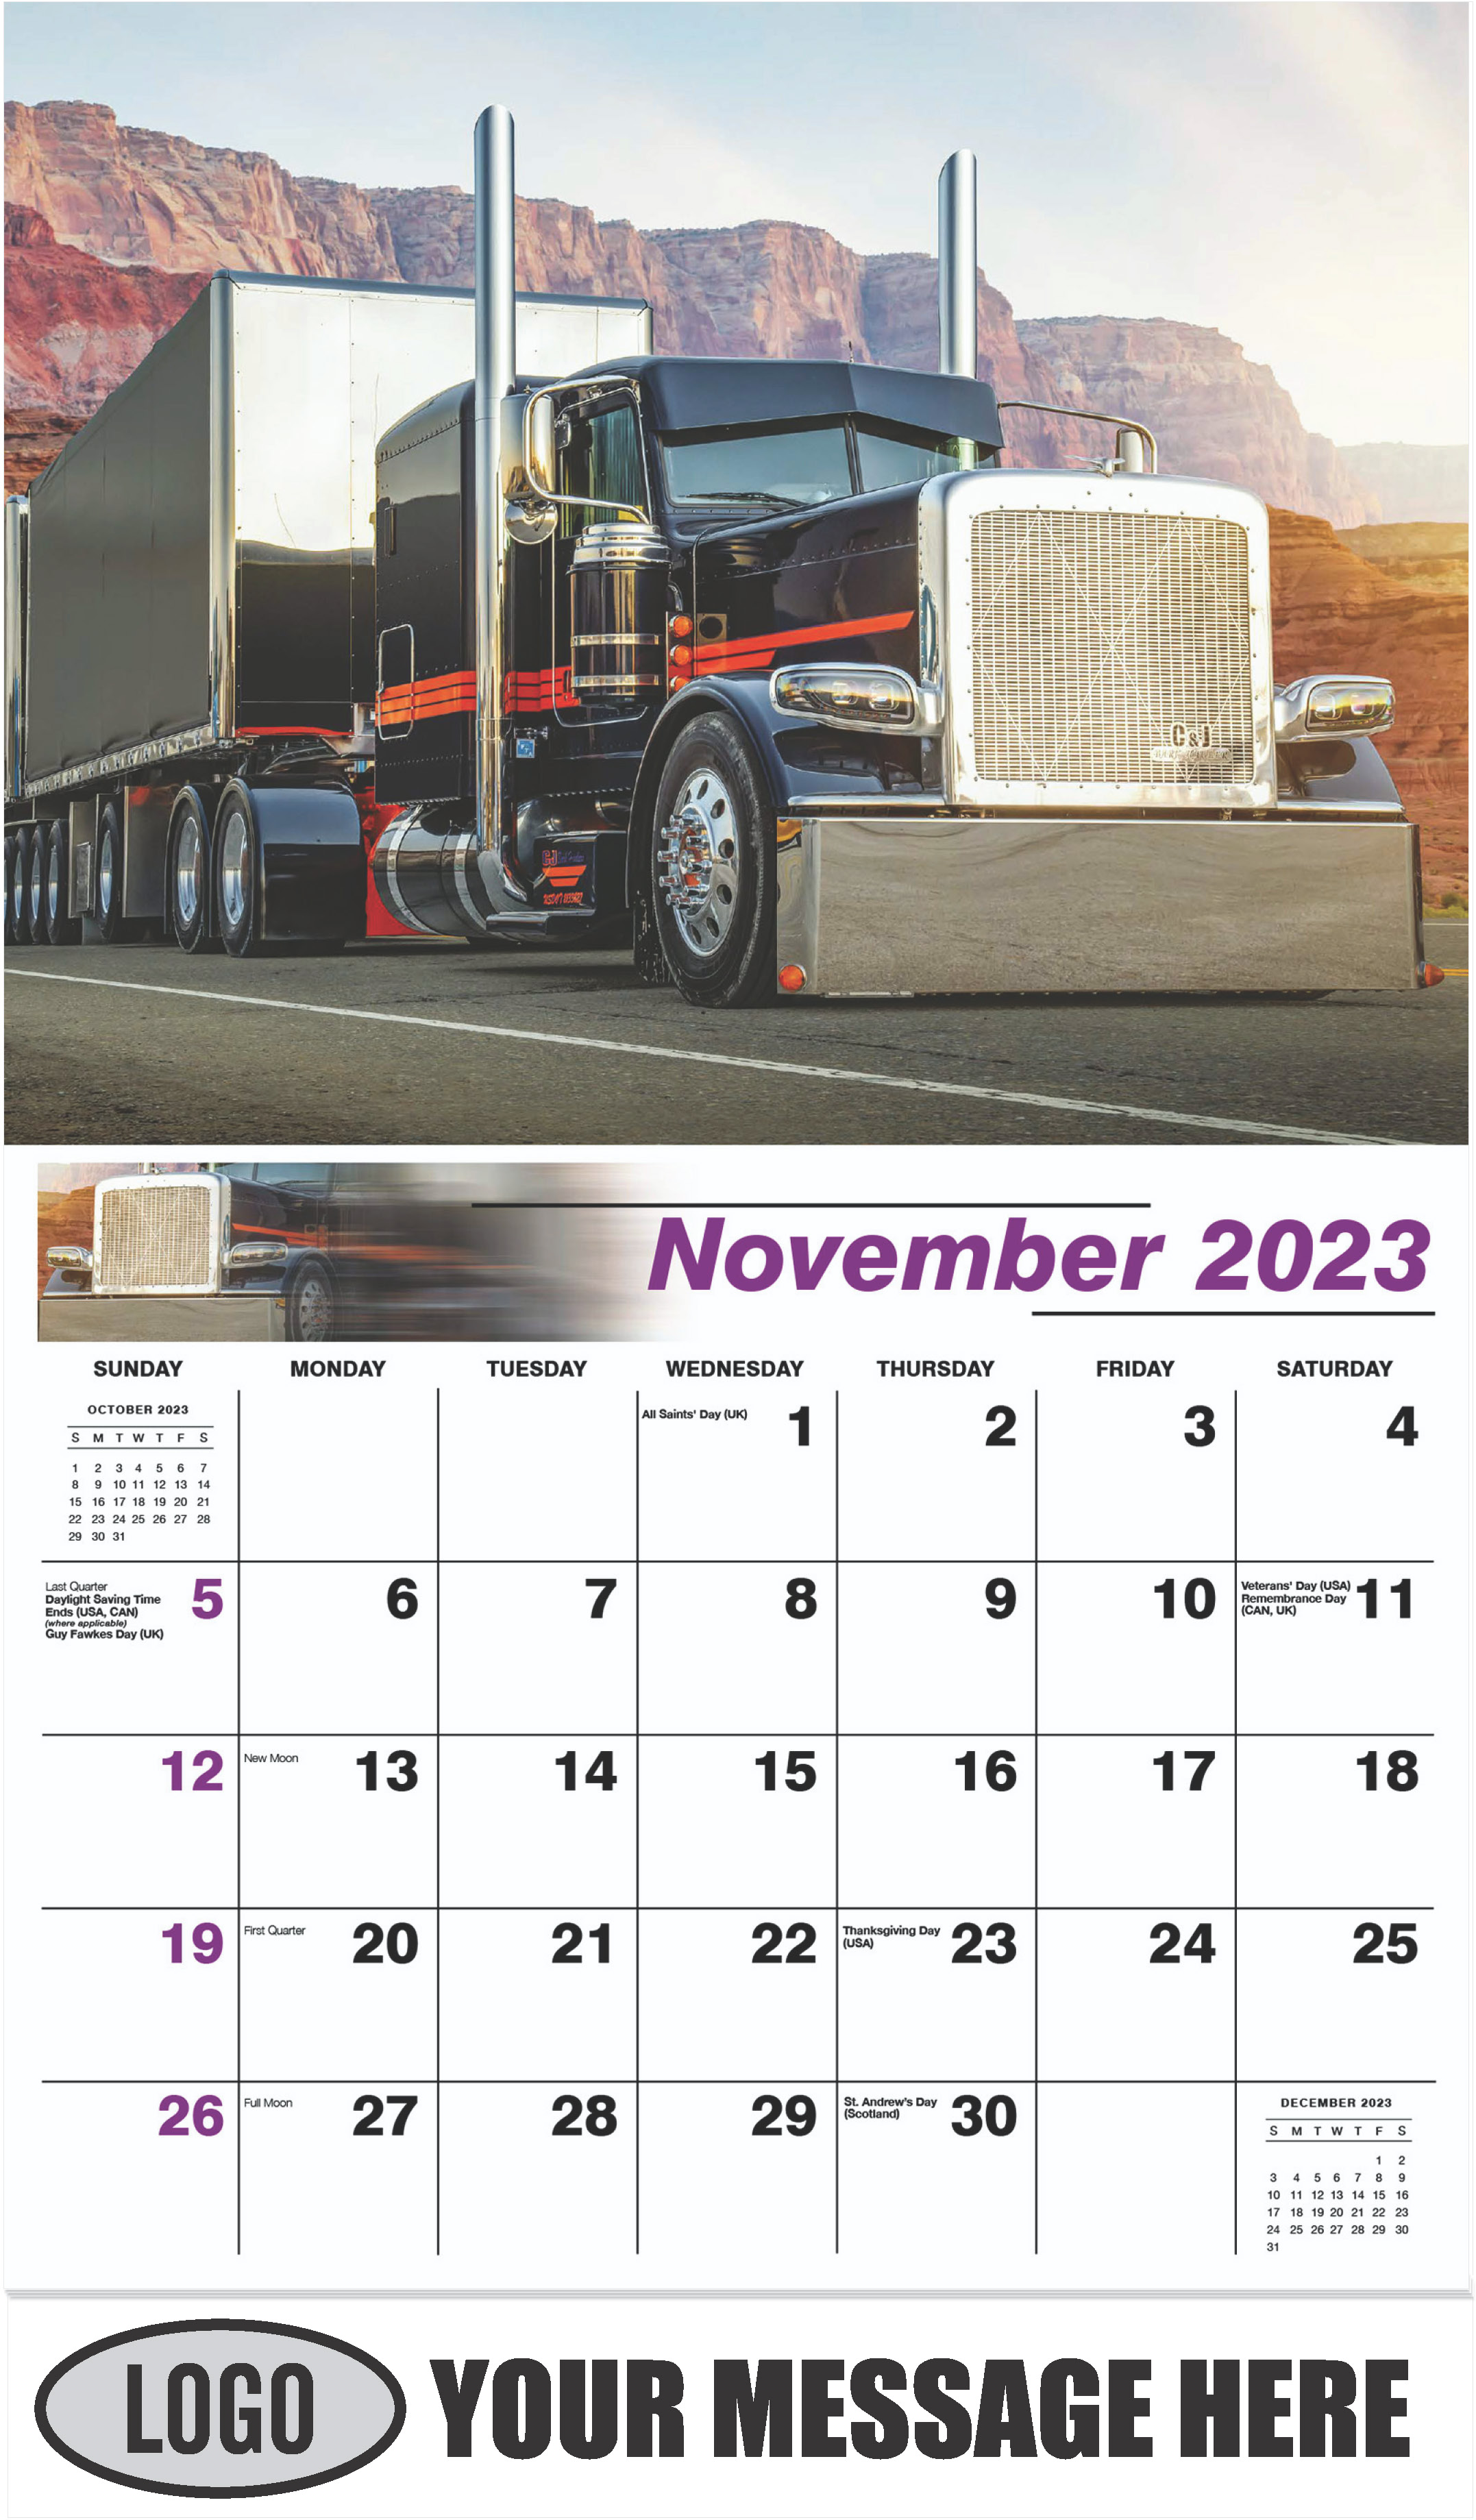 2018 Peterbilt 389 - November - Kings of the Road 2023 Promotional Calendar